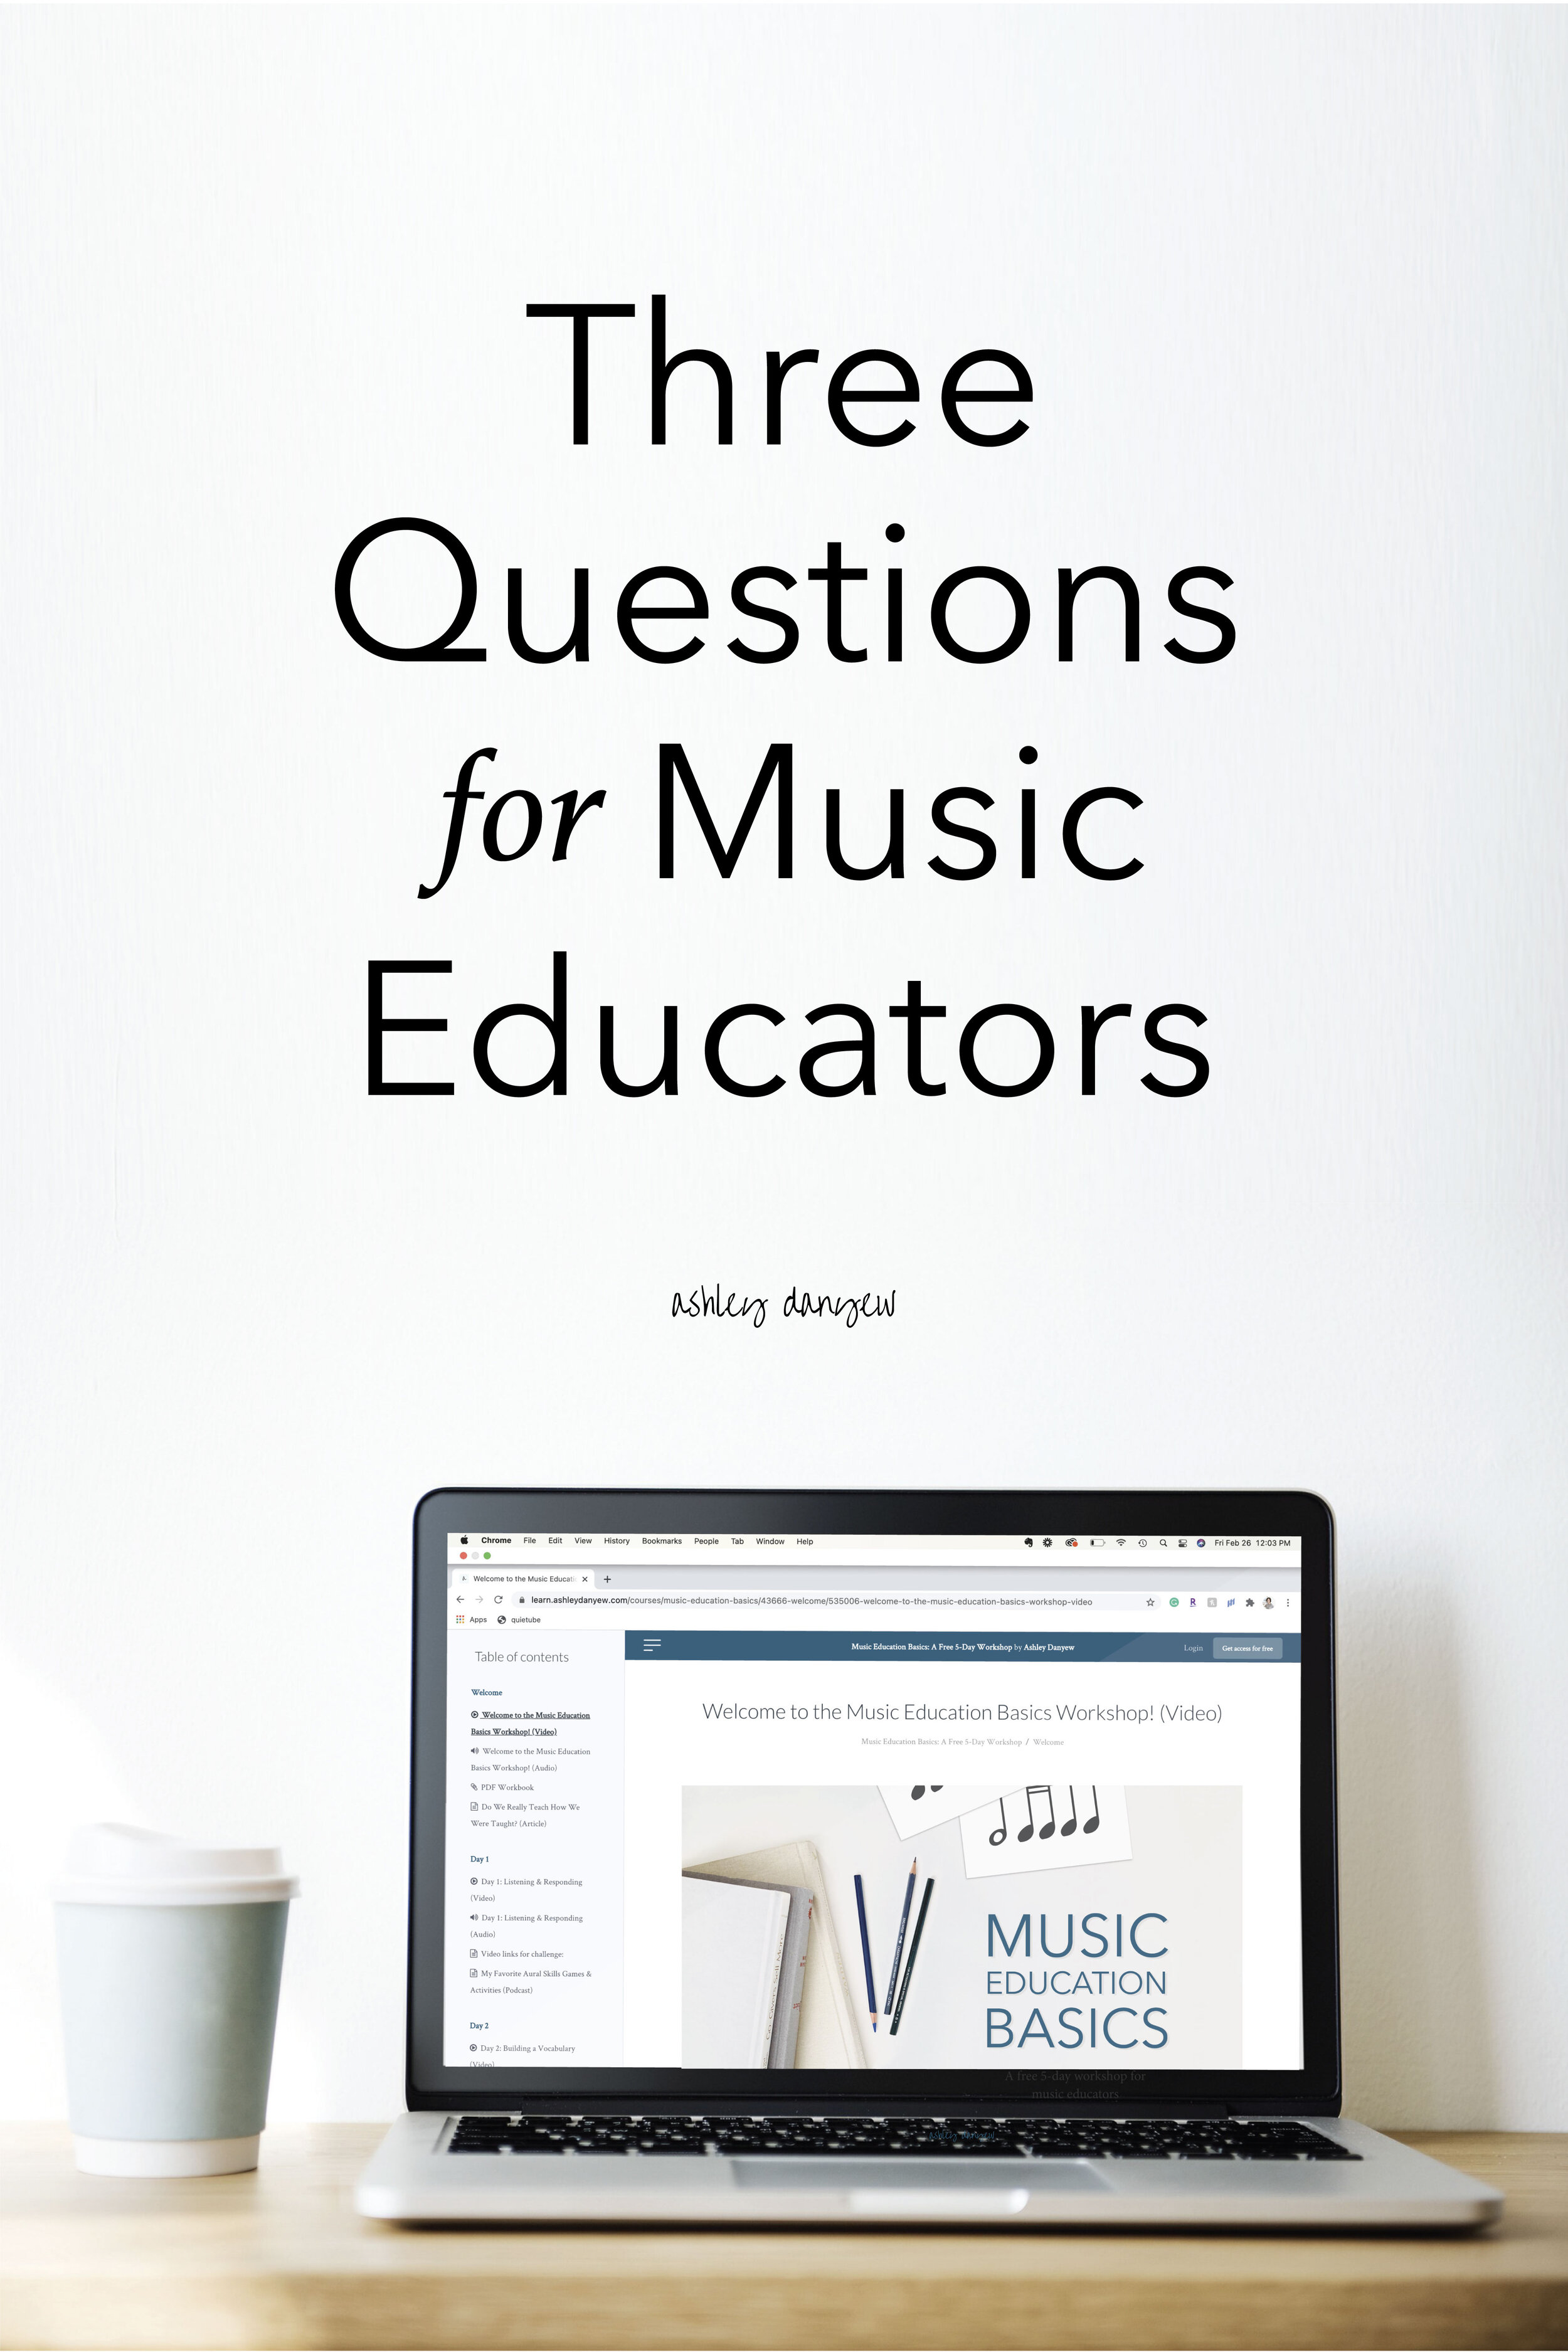 research topics for music educators